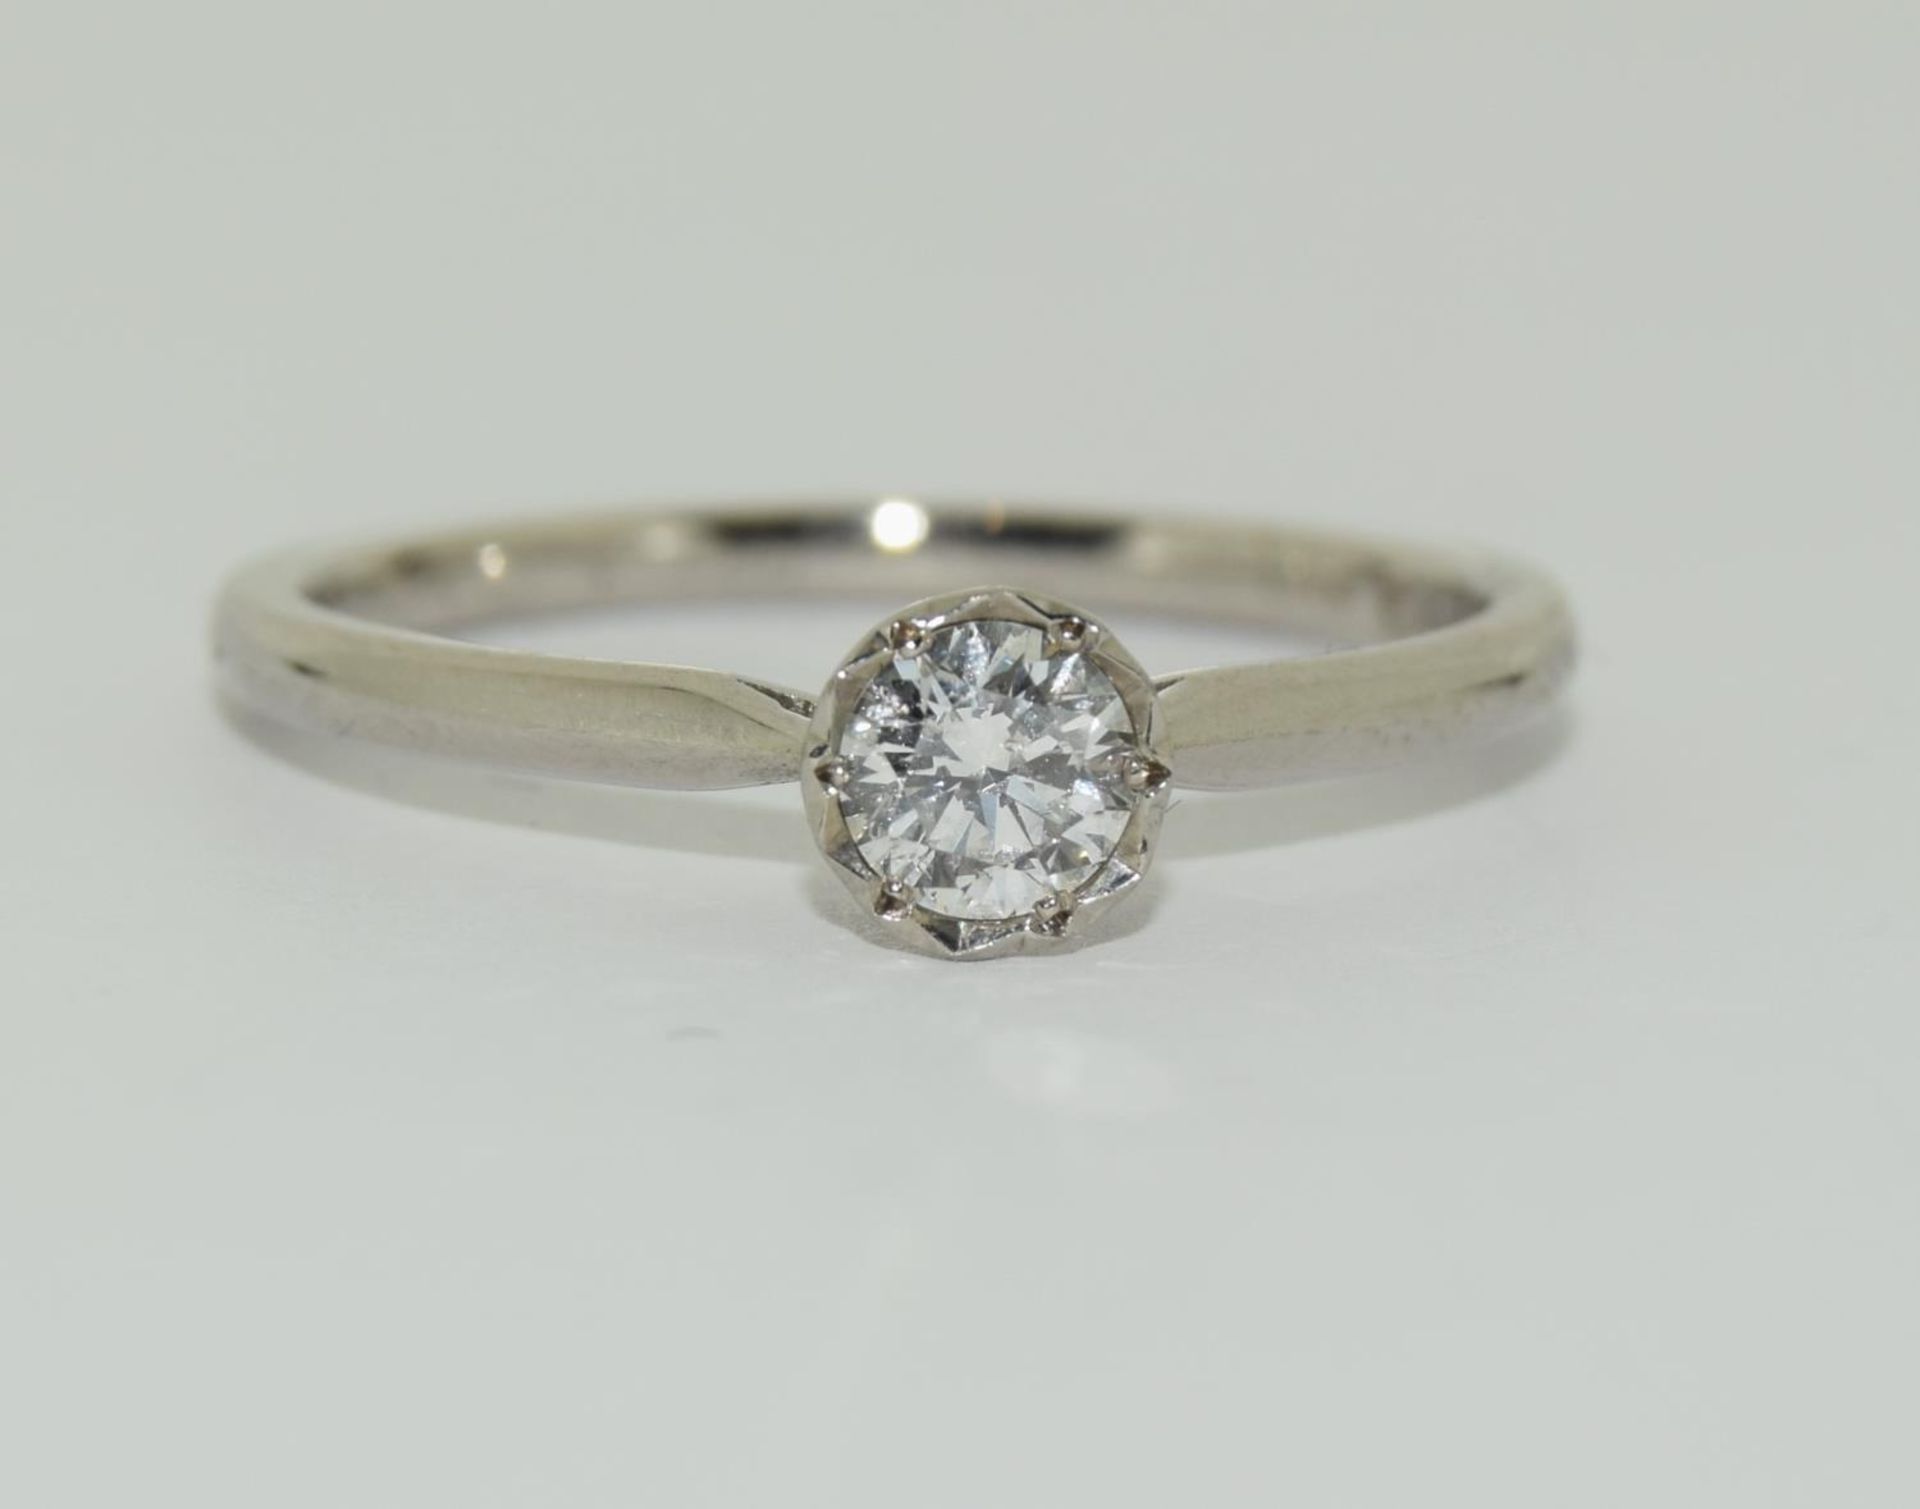 Palladium solitaire ring featuring brilliant round cut diamond in an illusion setting total